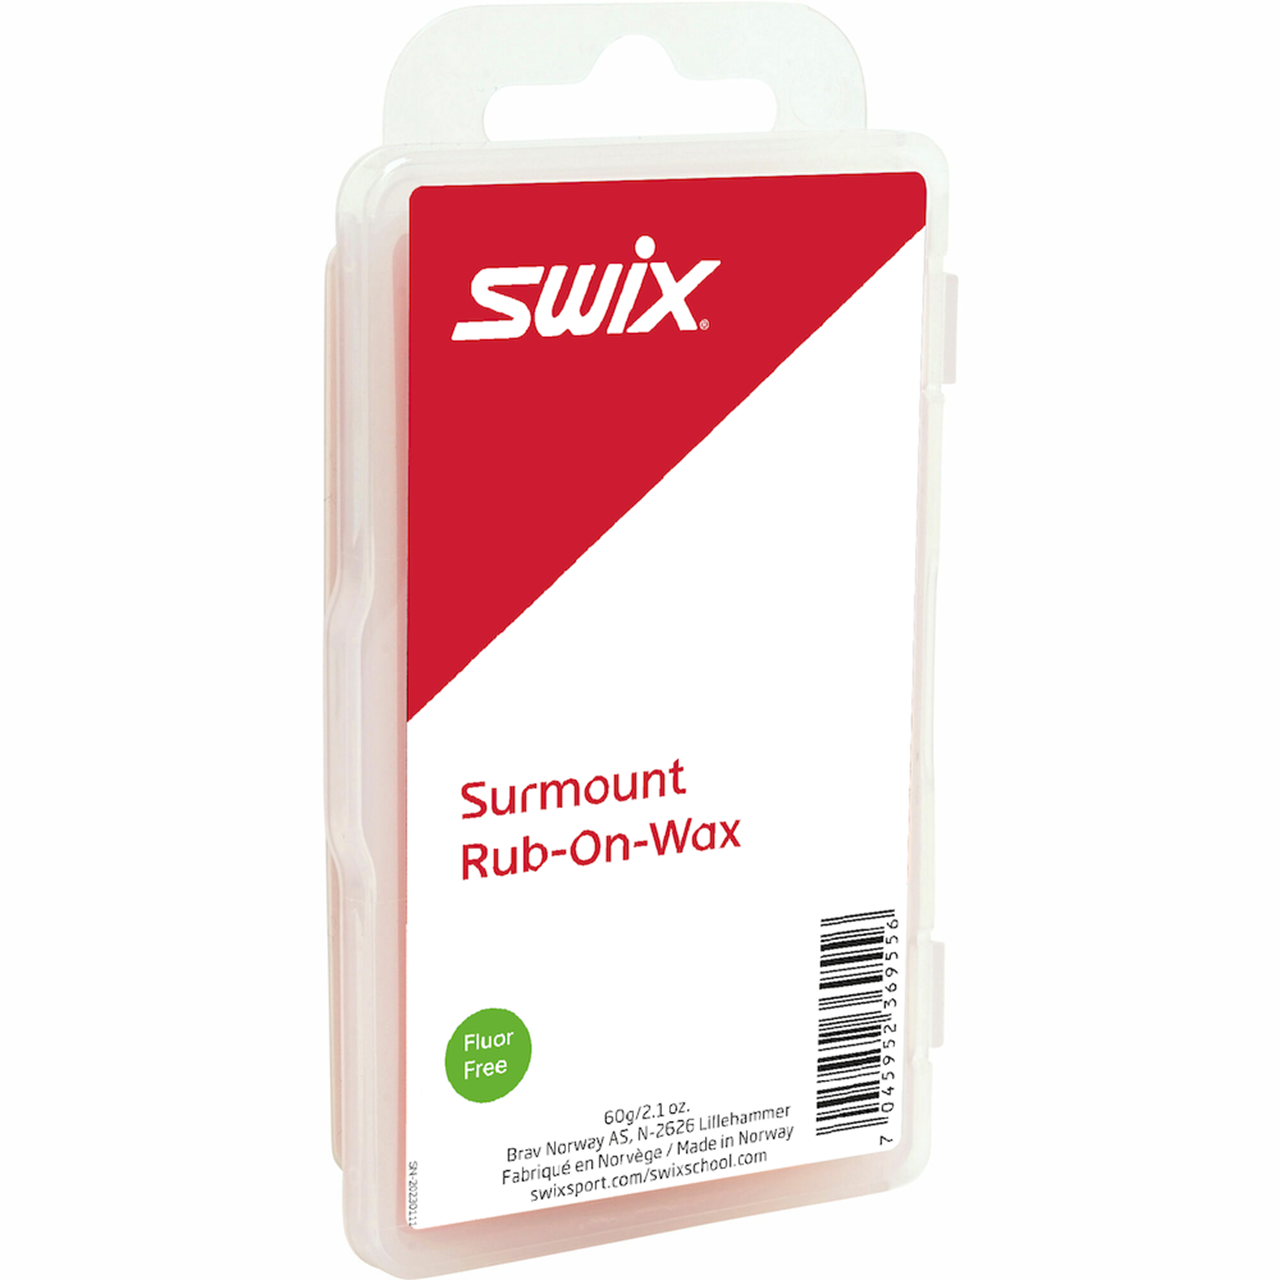 SIWX Surmount Skin Wax 60g, Rub-on